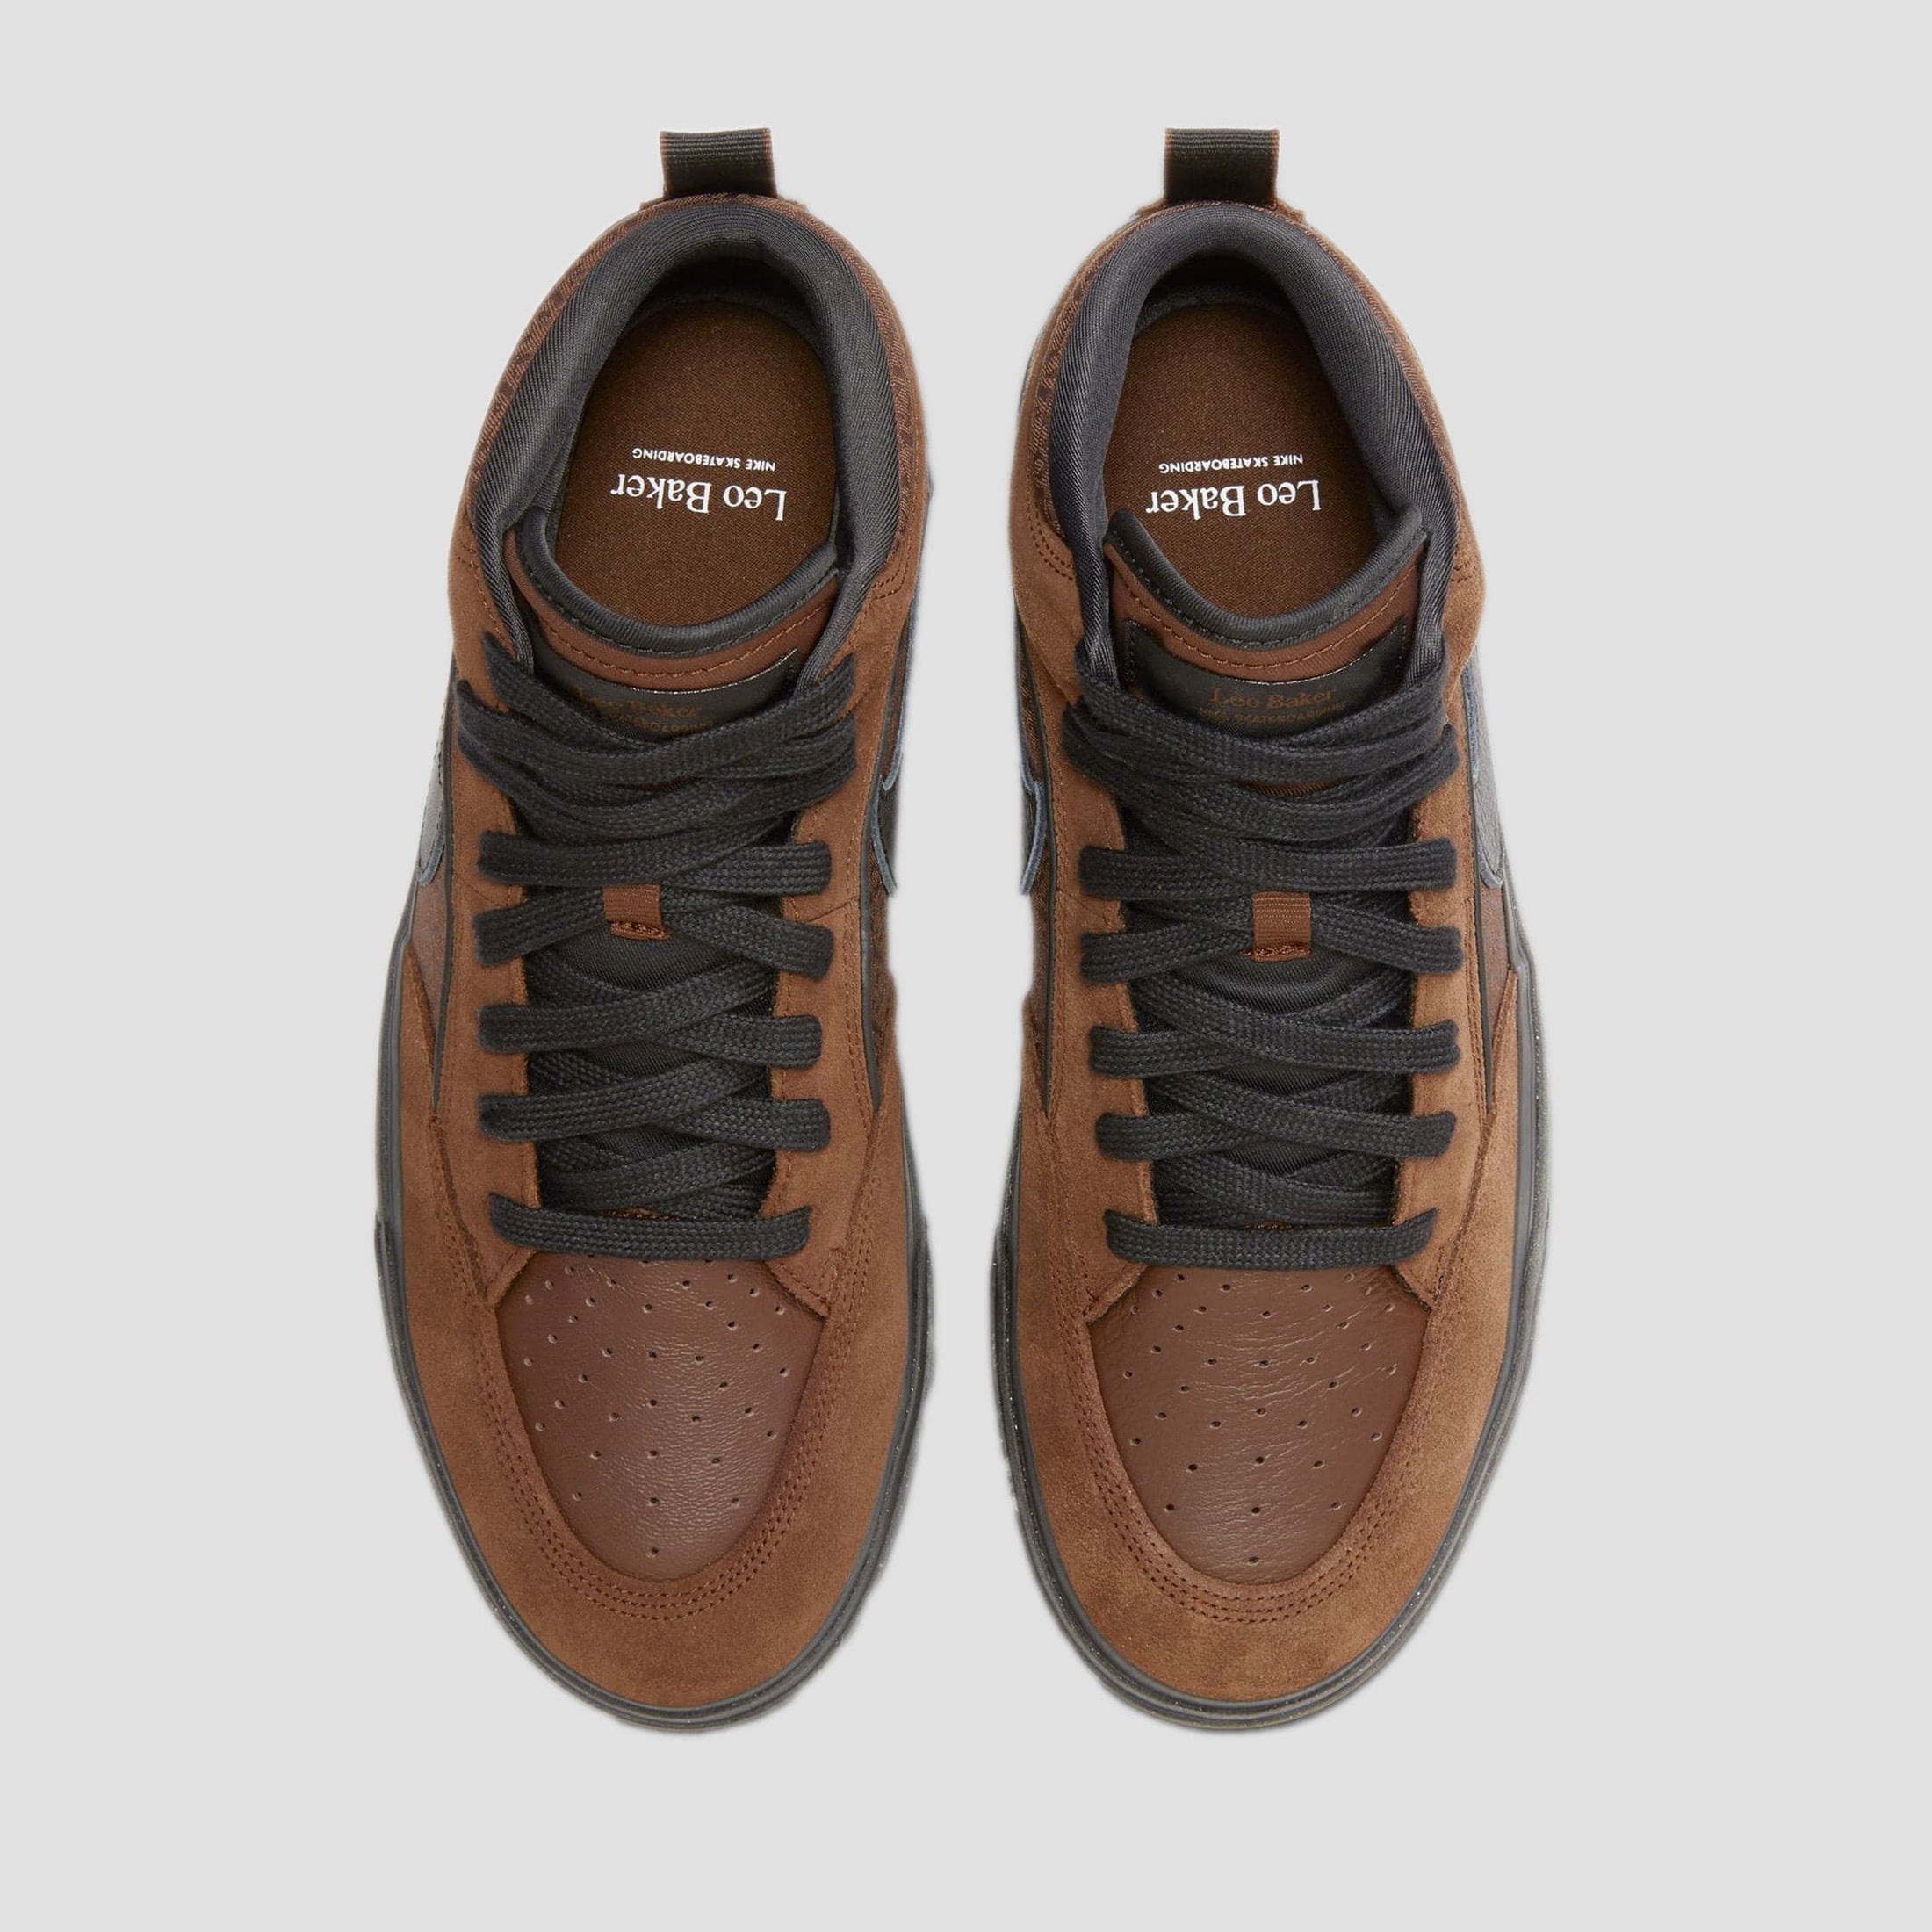 Nike SB React Leo Skate Shoes Brown / Brown / Brown / Earth / Black